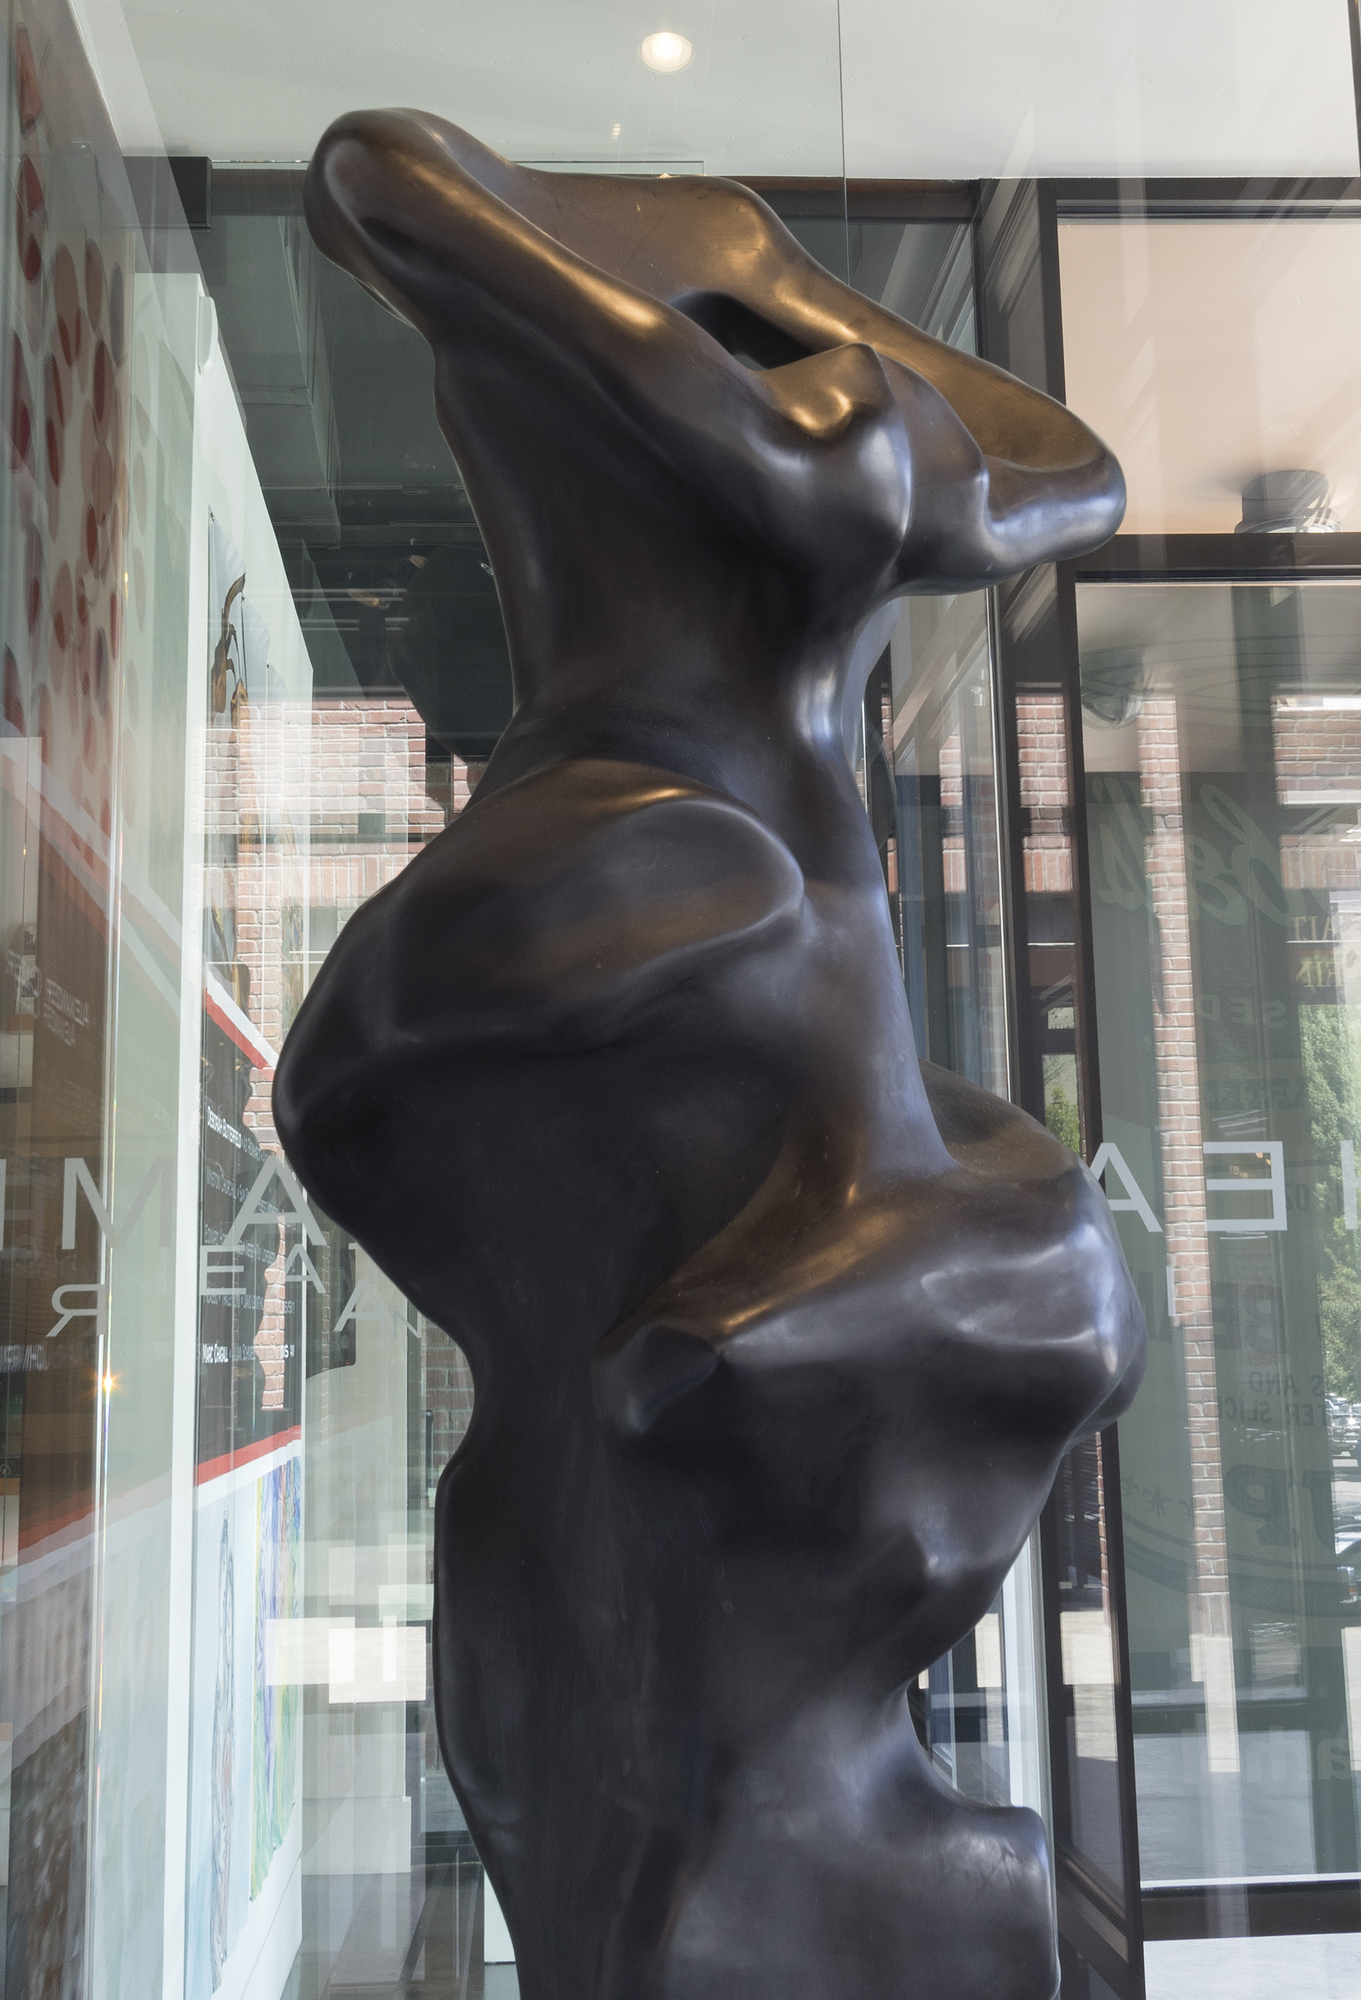 HERB ALPERT - Embrace - bronze with black patina - 83 x 27 x 27 in.